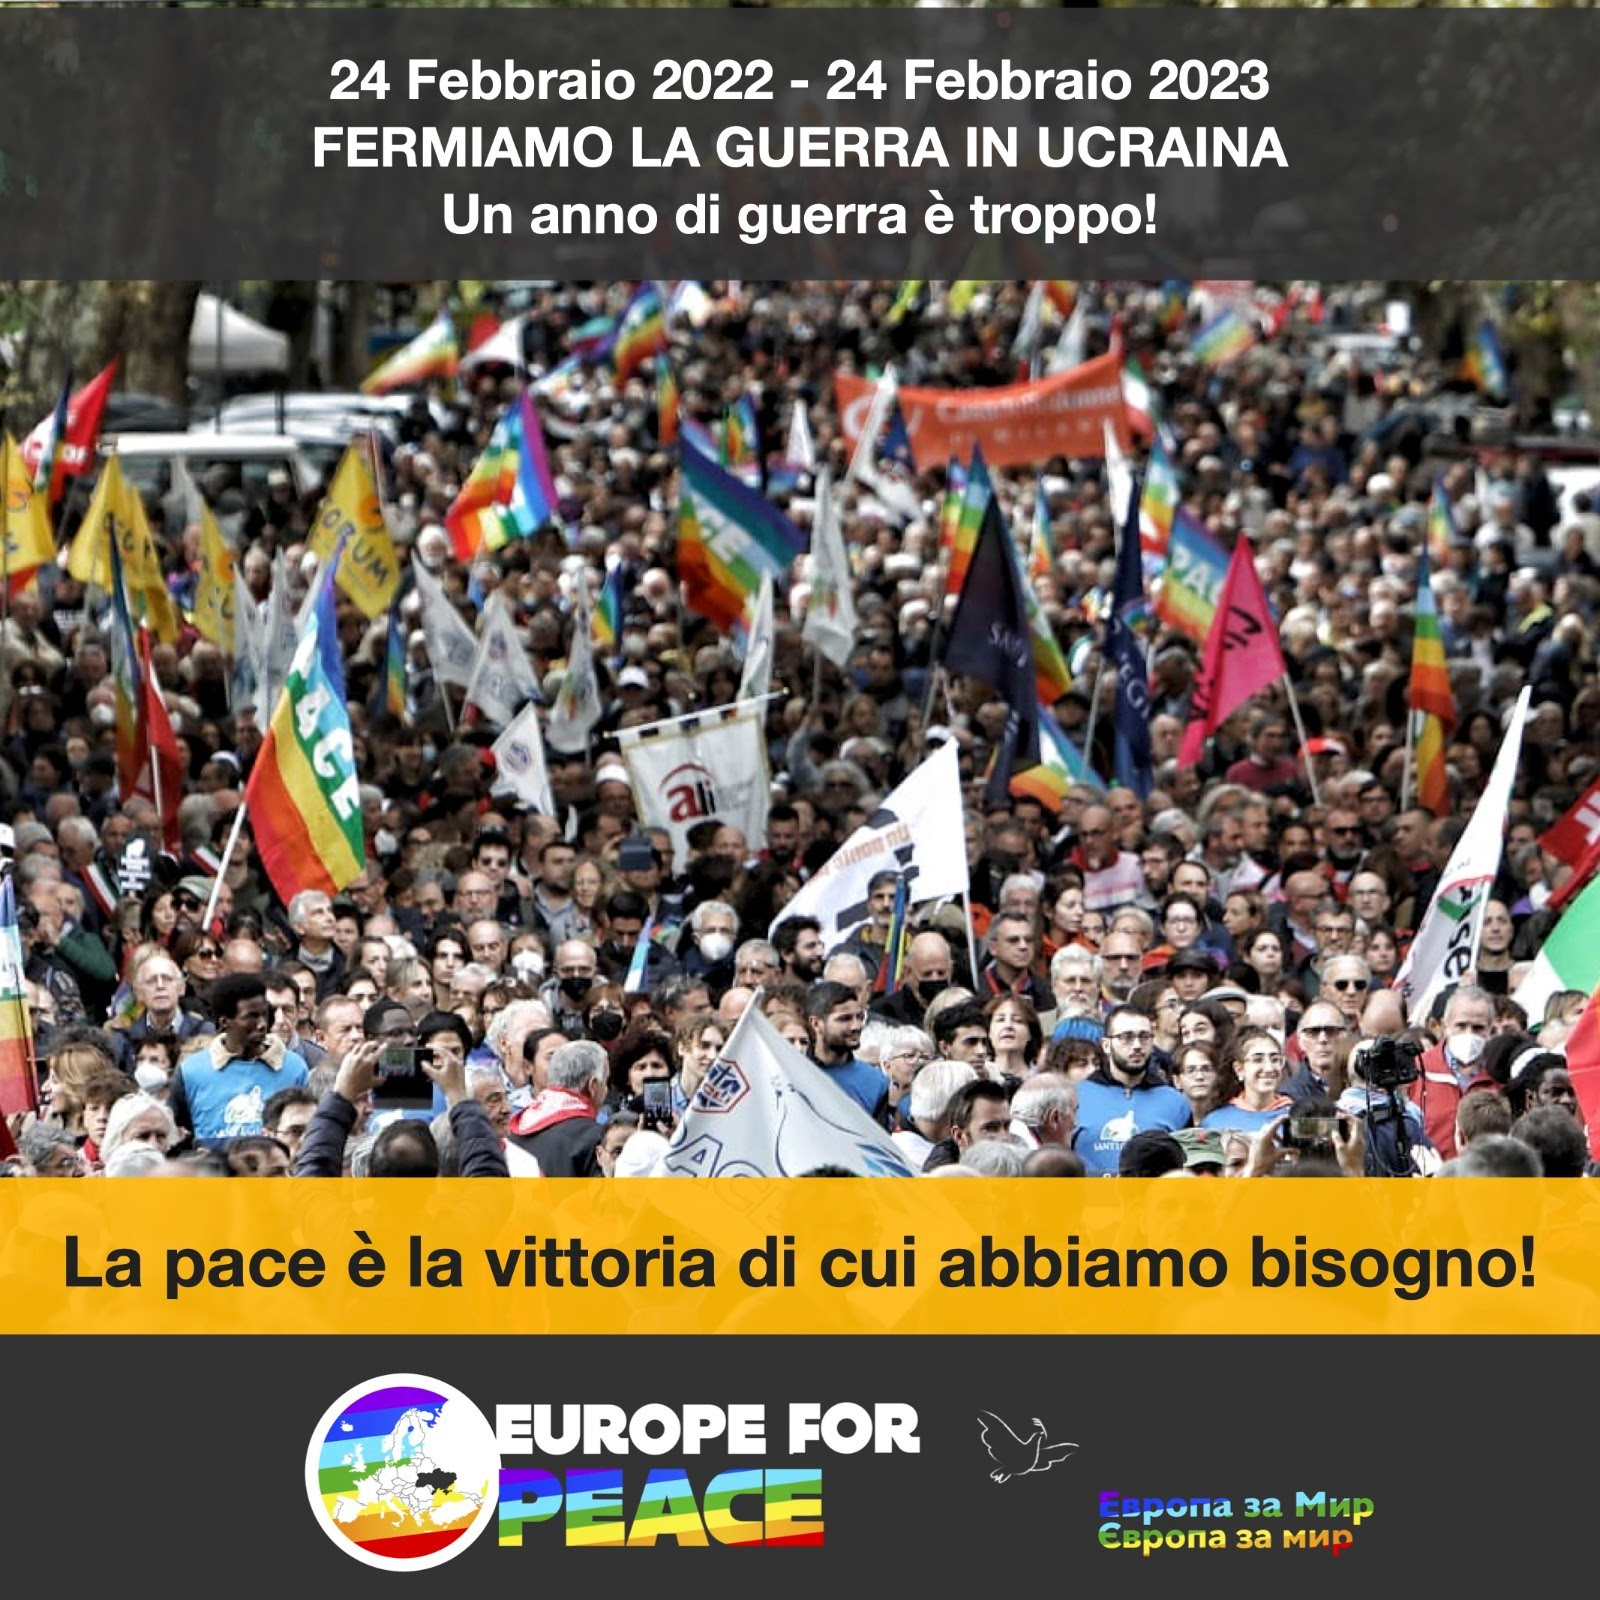 Europe for Peace - Marcia per la pace Perugia-Assisi @ Perugia-Assisi